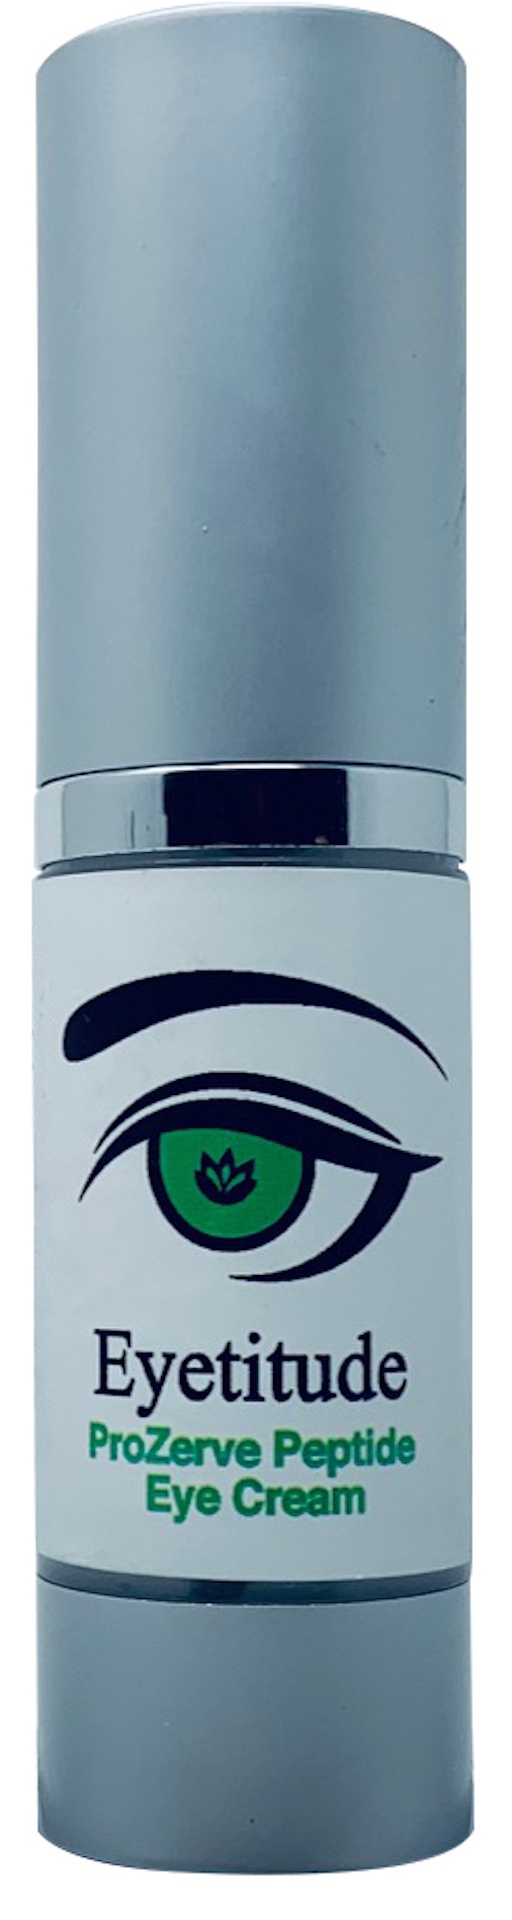 Eyetitude Prozerve Peptide Eye Cream